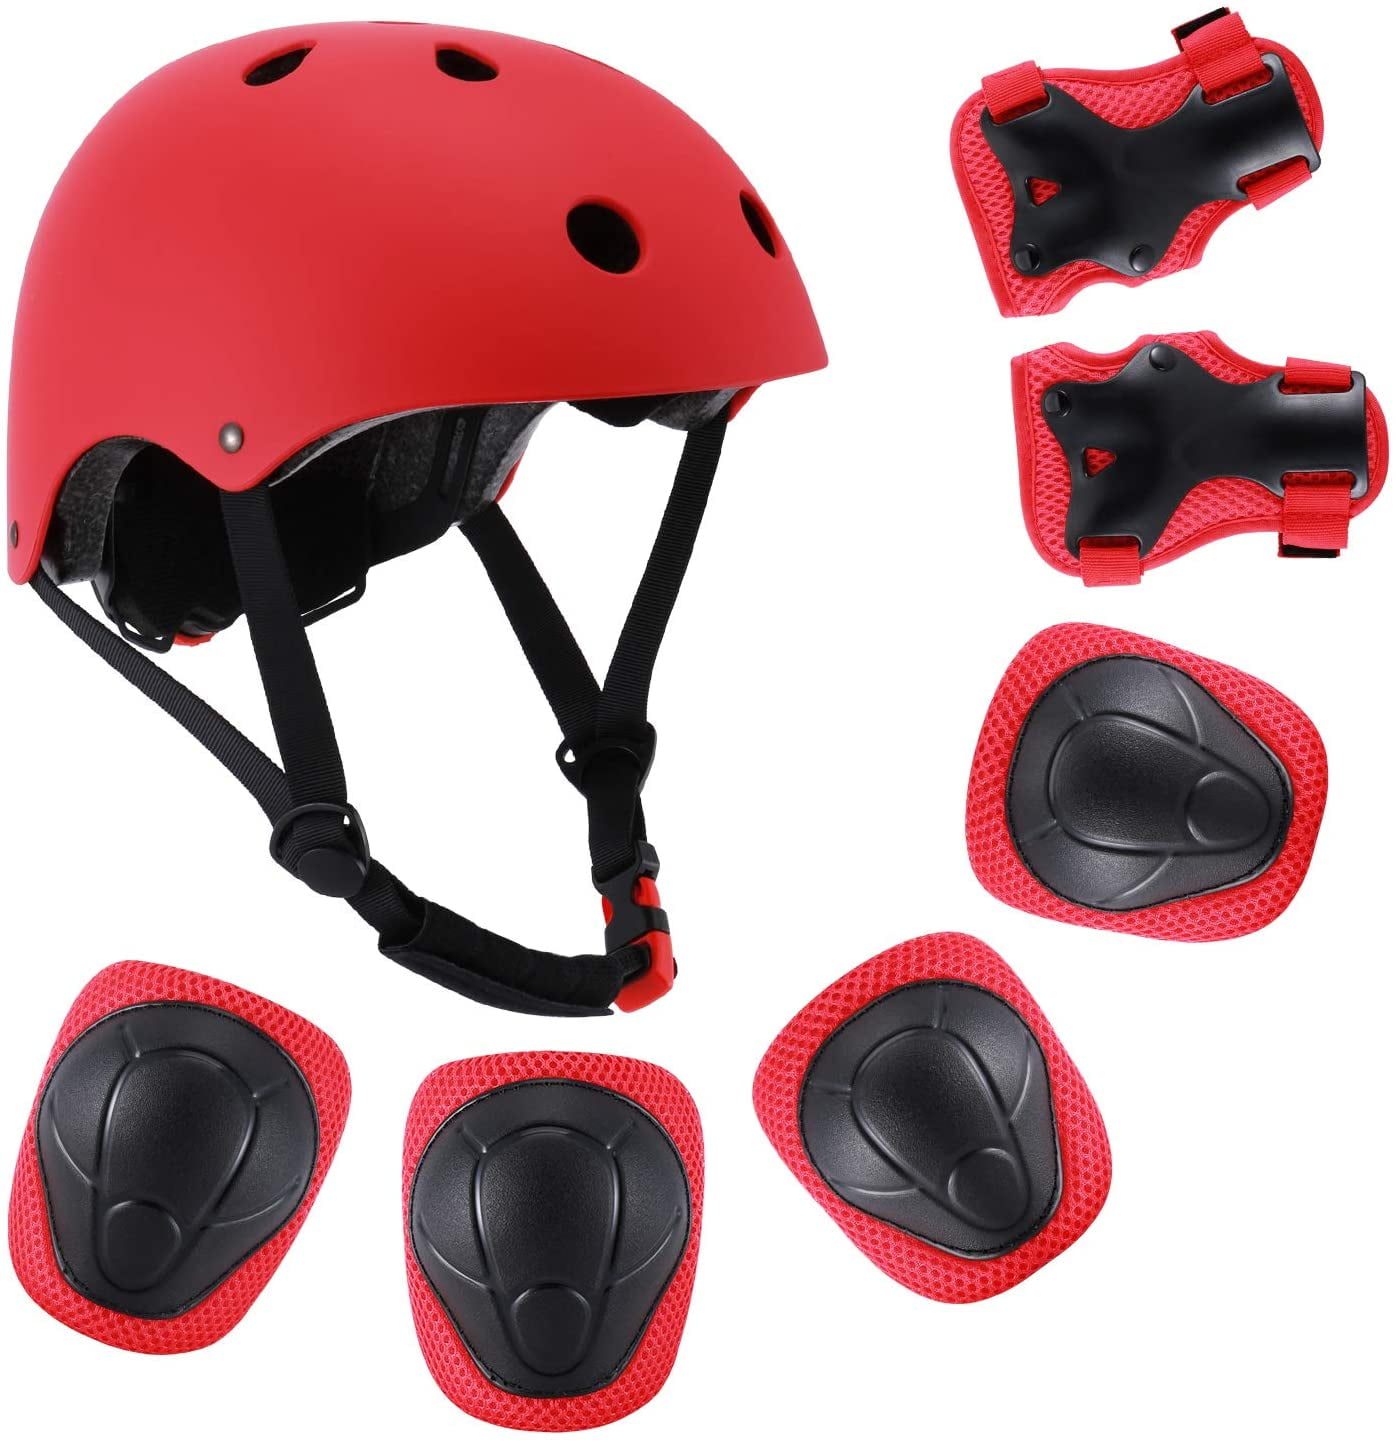 7Pcs Kids Protective Gear Set Skateboard Helmet Knee Elbow Pads Wrist Guards UK 